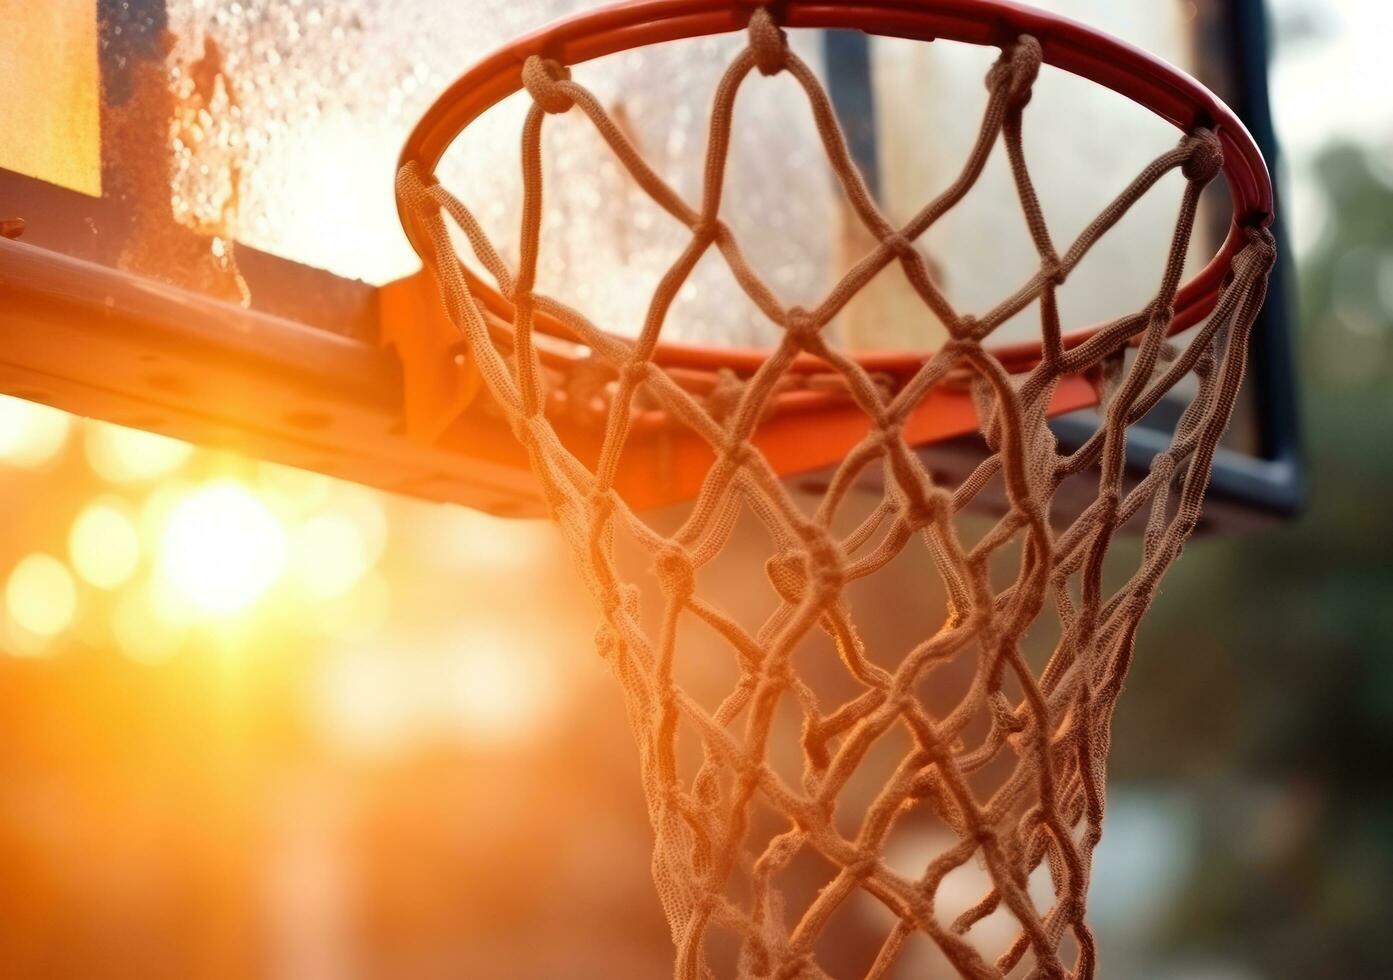 ai generiert Basketball Dunk von Korb Netz auf Basketball Feld foto